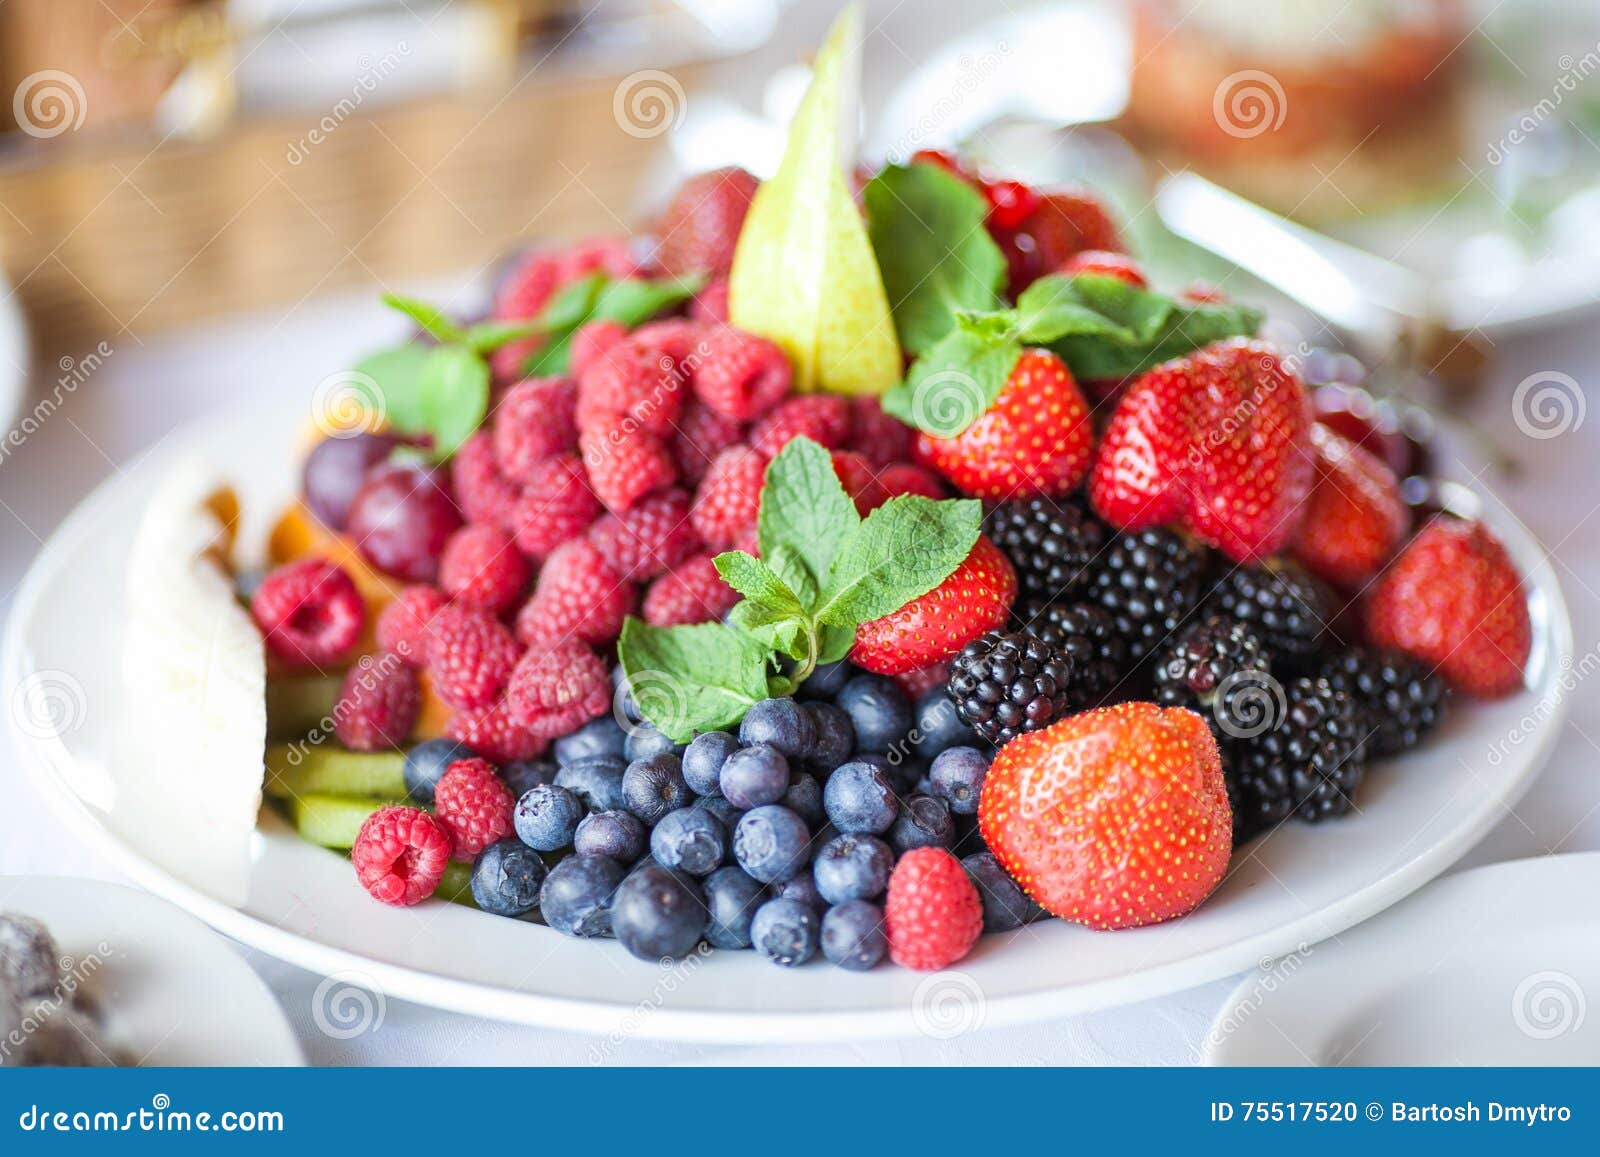 berries.antioxidants, detox diet, organic fruits.